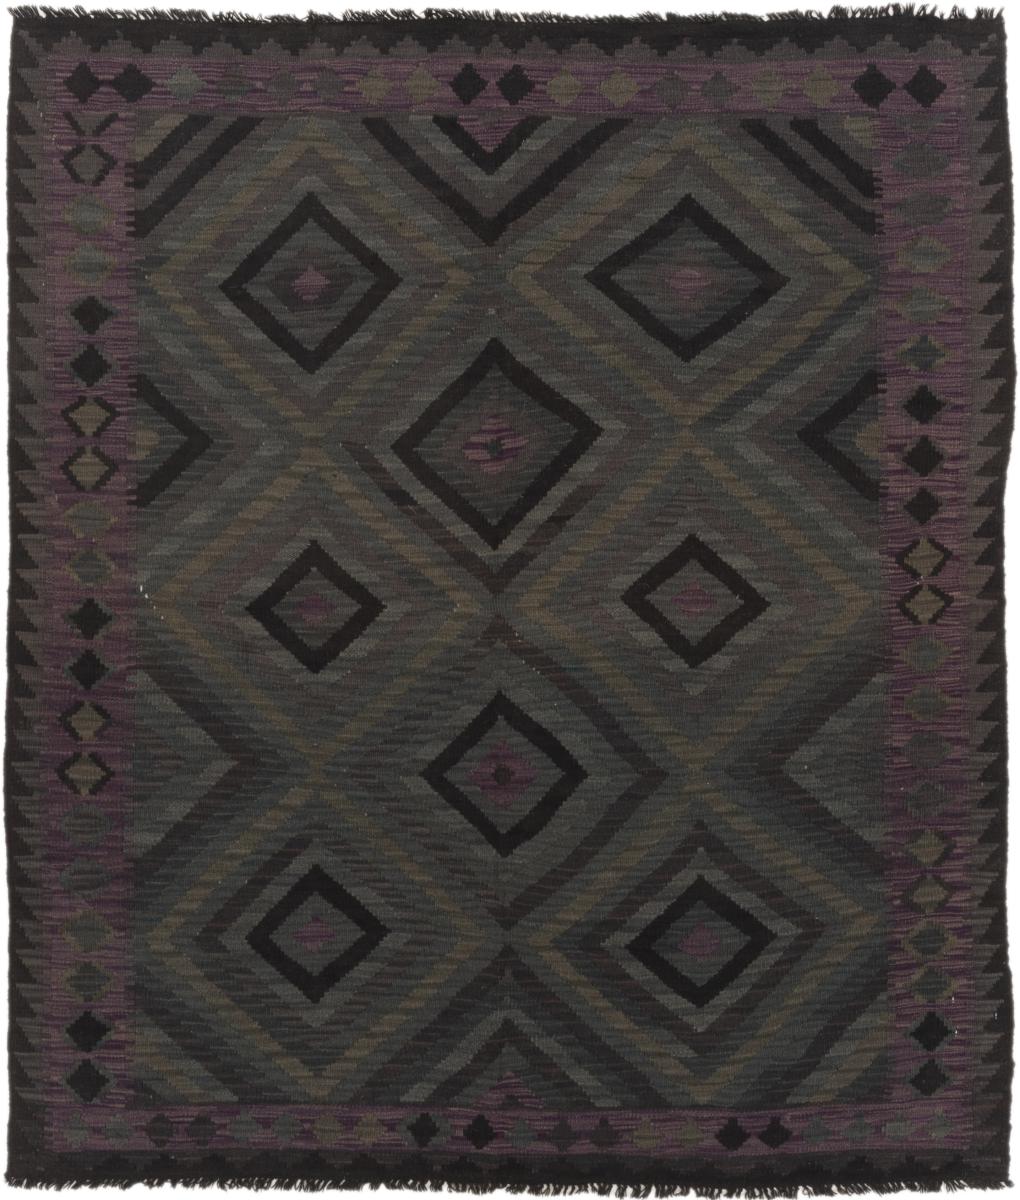 Afghan rug Kilim Afghan Heritage 6'6"x5'7" 6'6"x5'7", Persian Rug Woven by hand